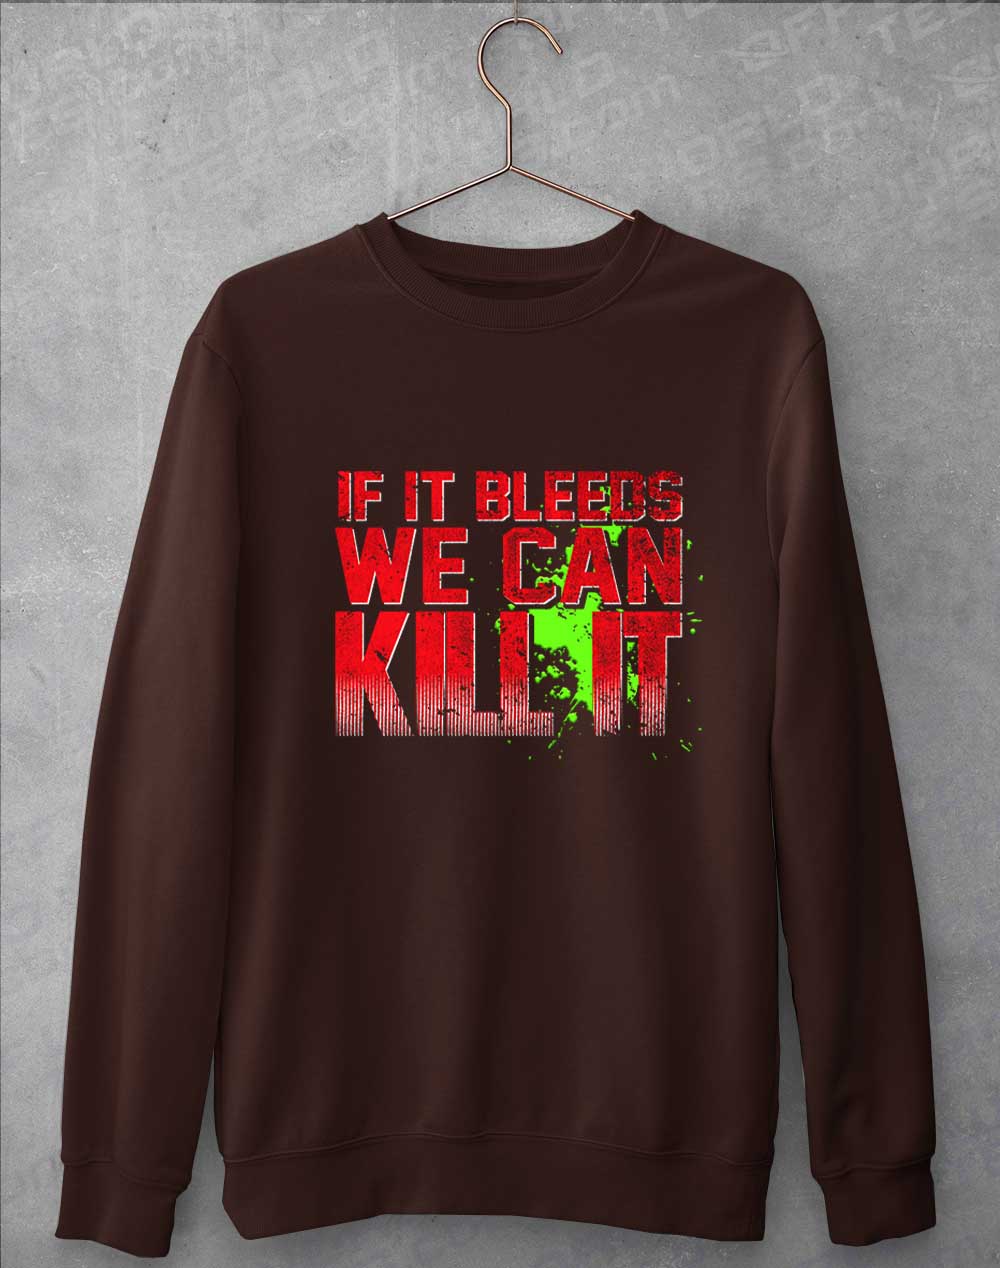 Hot Chocolate - If It Bleeds We Can Kill It Sweatshirt